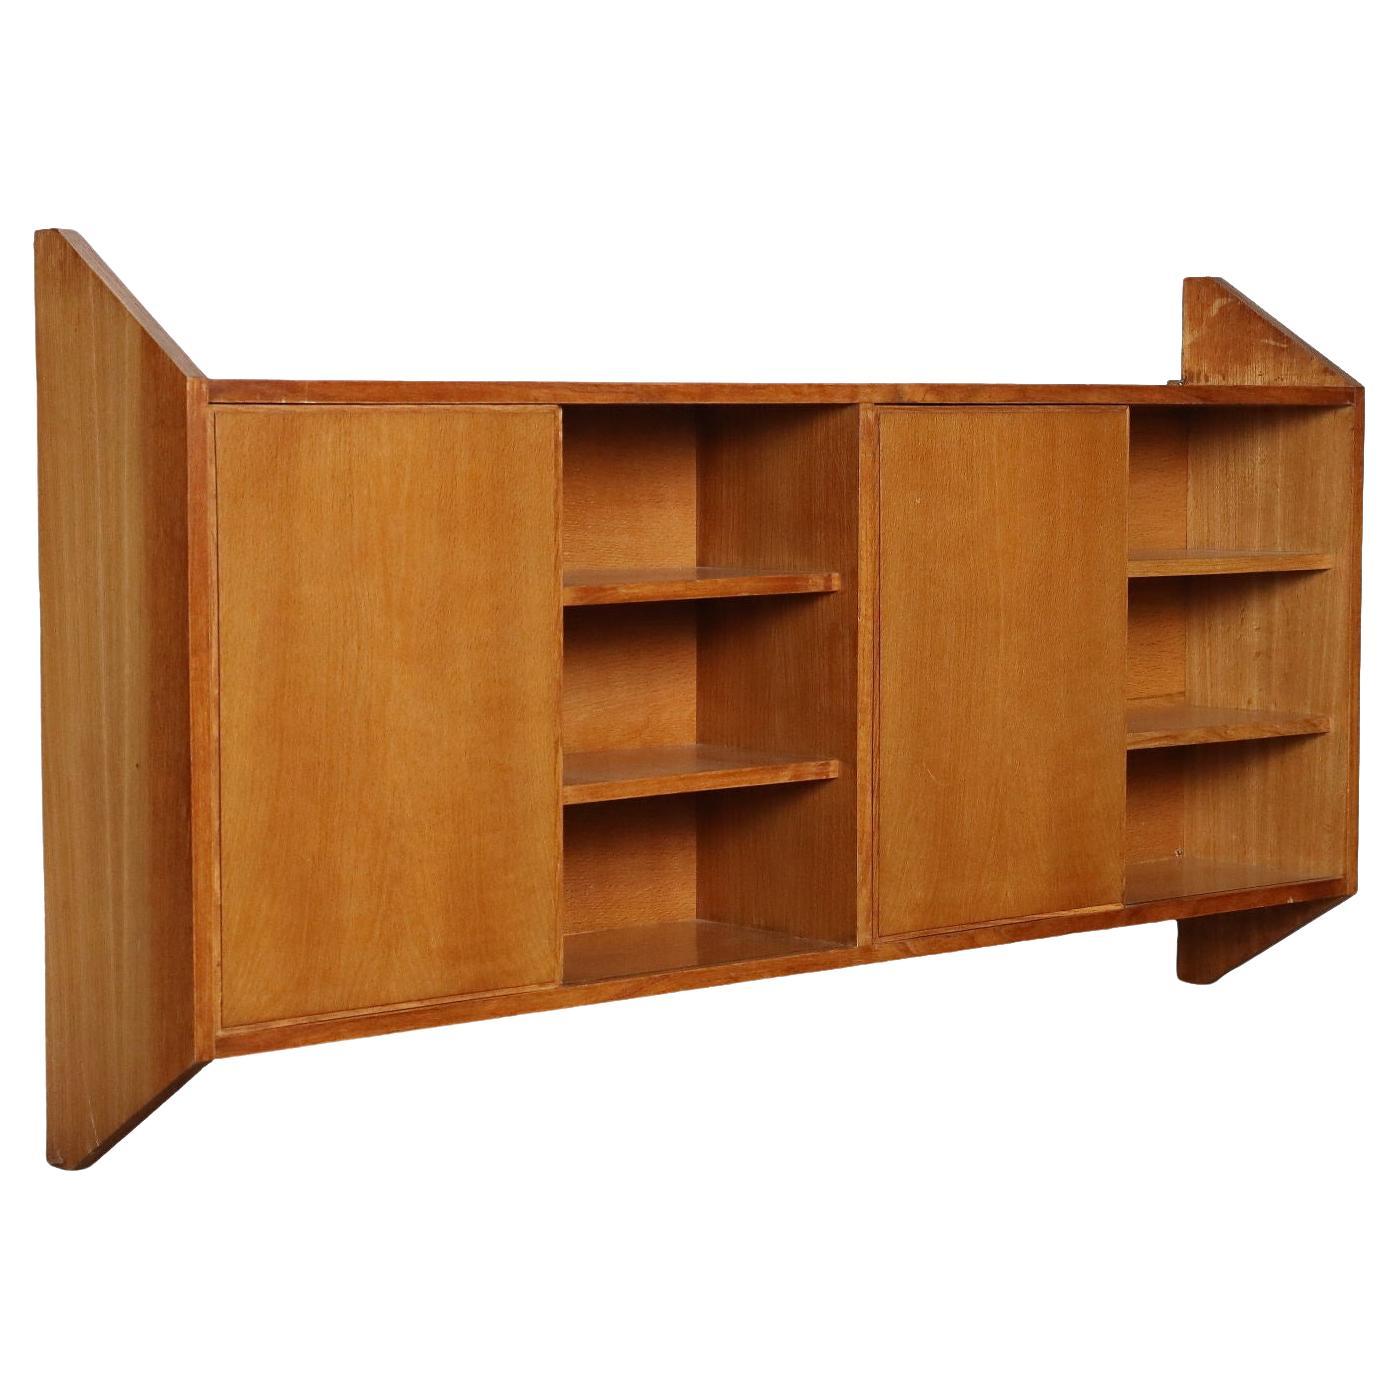 1950s wall cabinet, oak veneer, light brown